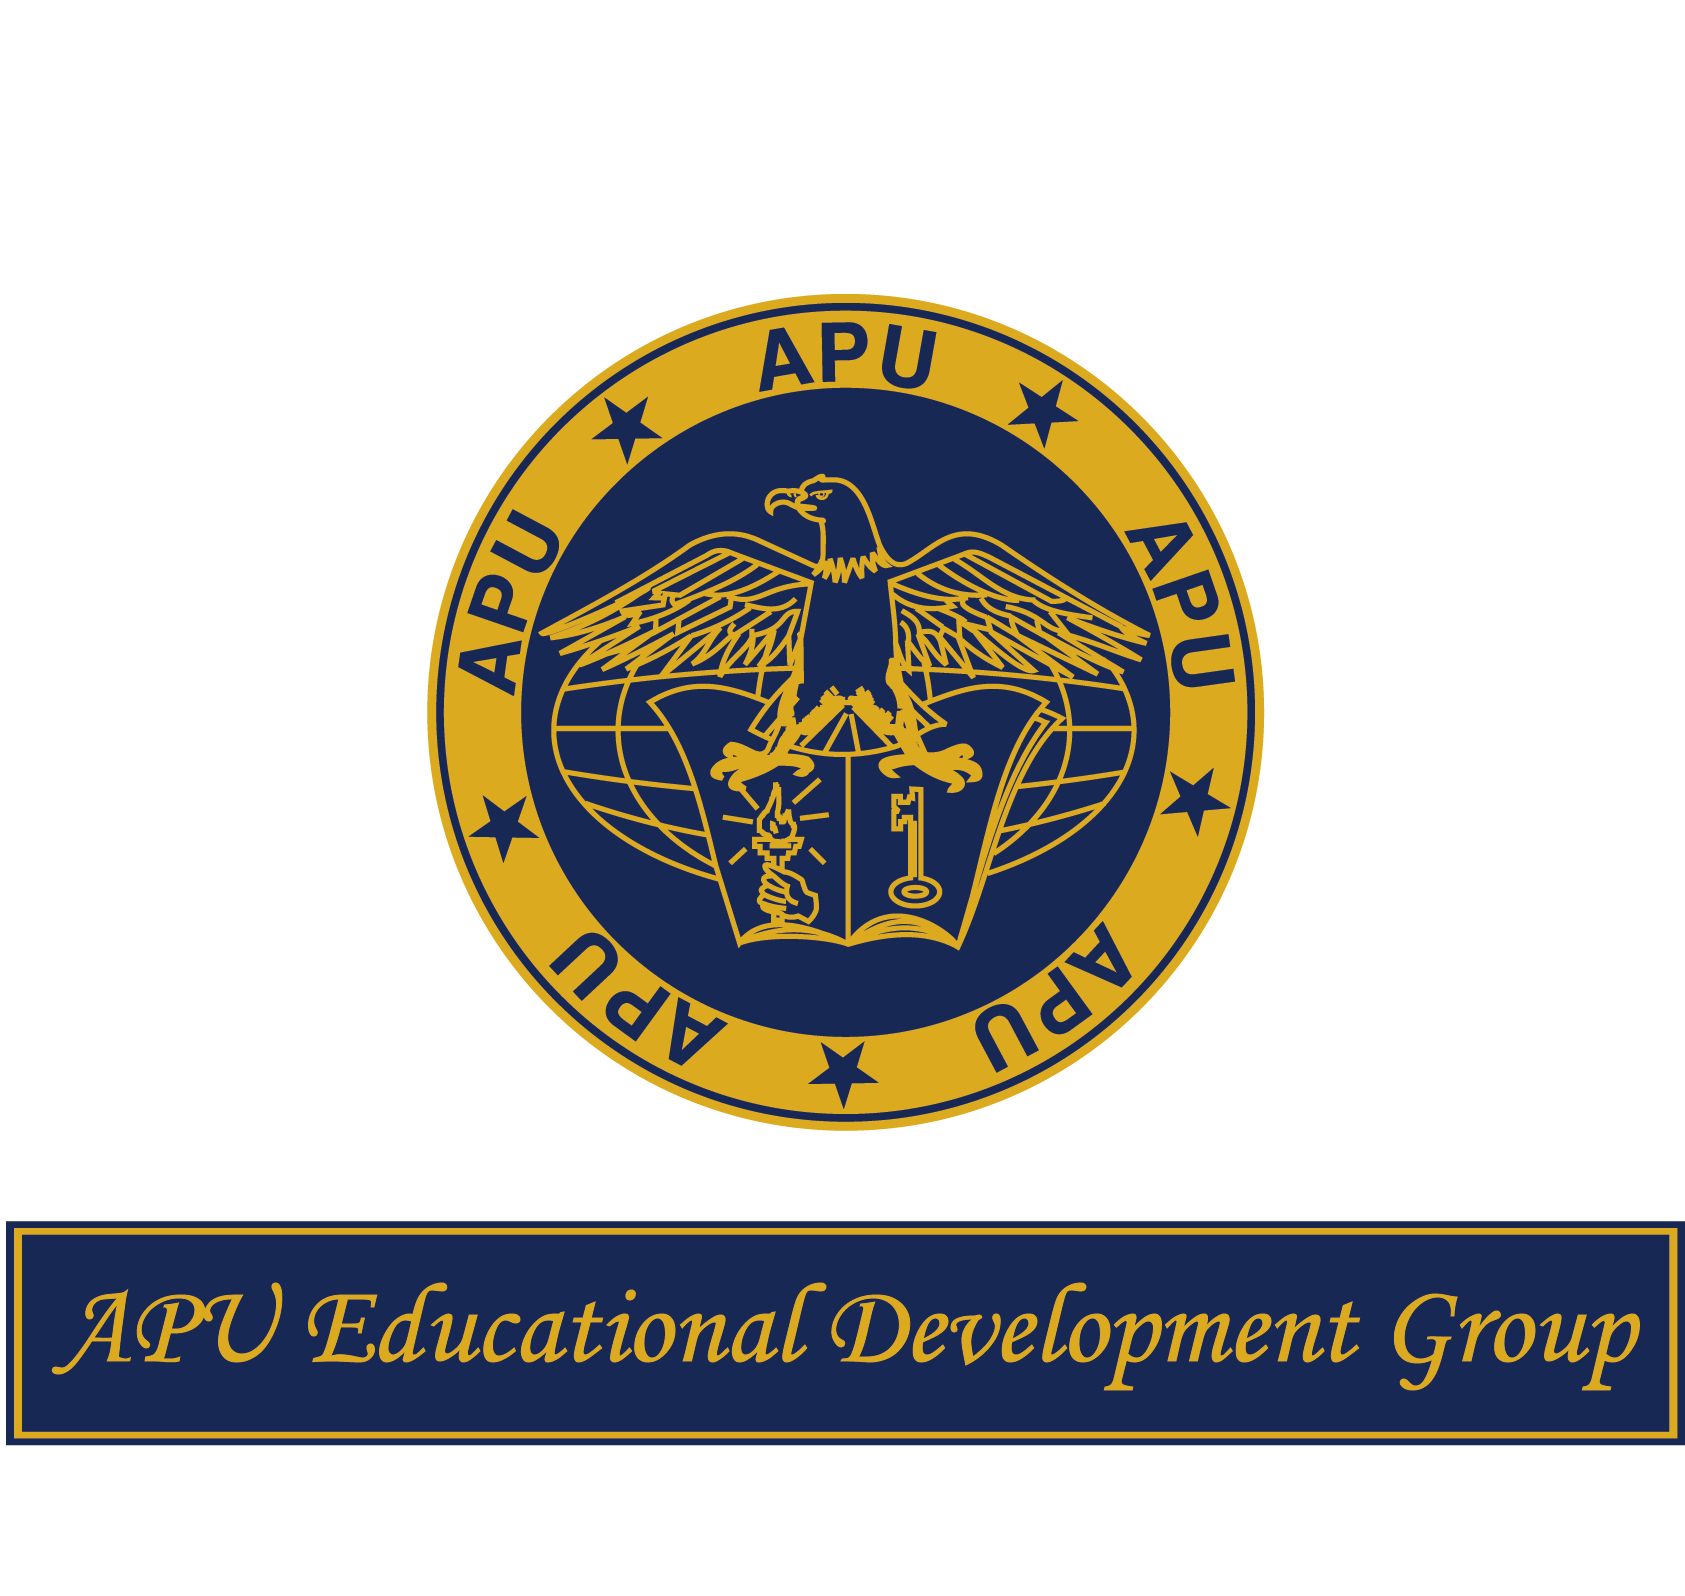 APU EDUCATION DEVELOPMENT GROUP